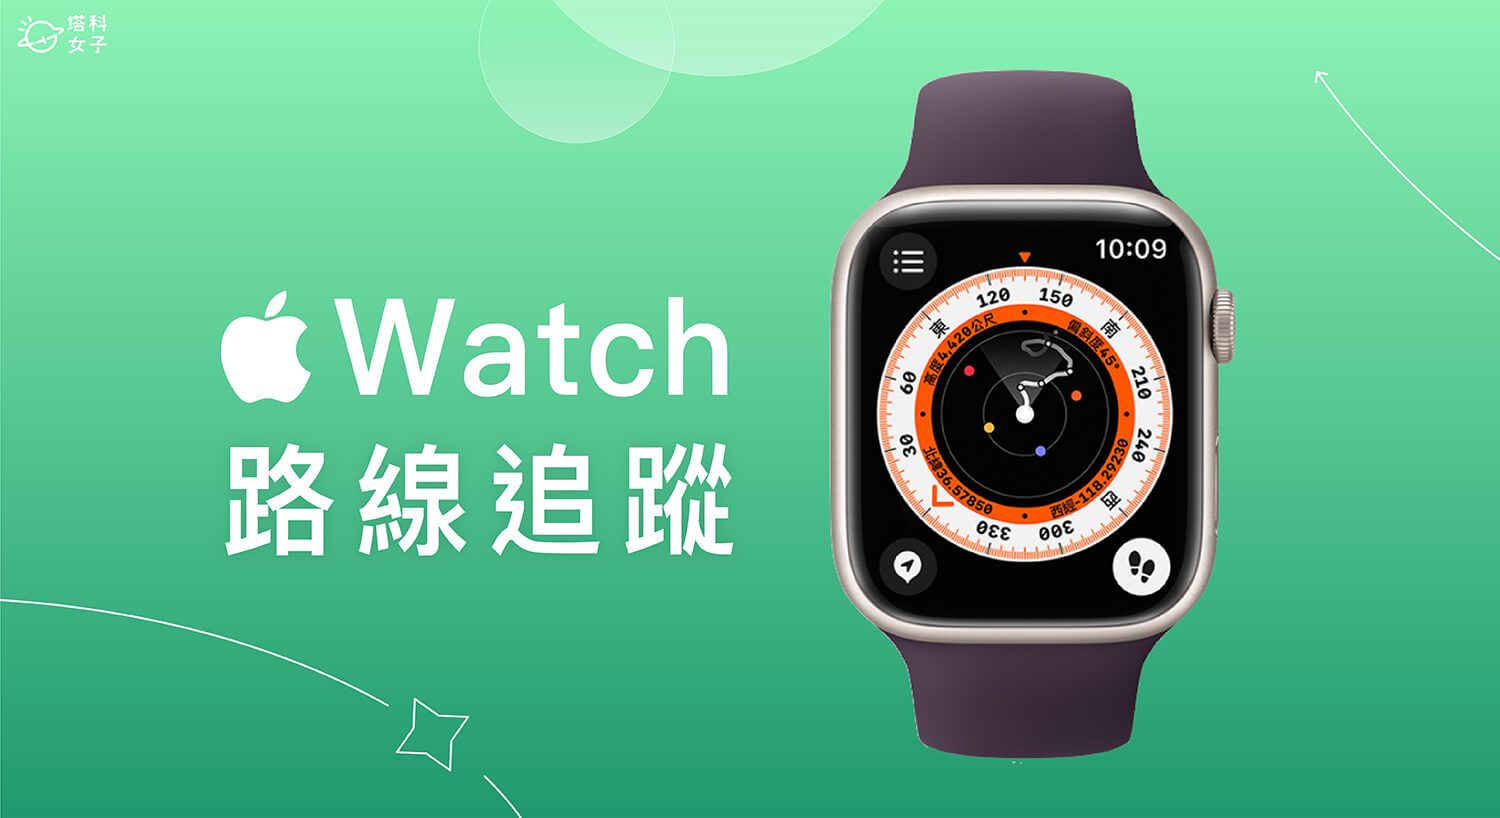 Apple Watch 指南針路徑追蹤功能可記錄路線並回溯路徑，避免迷路